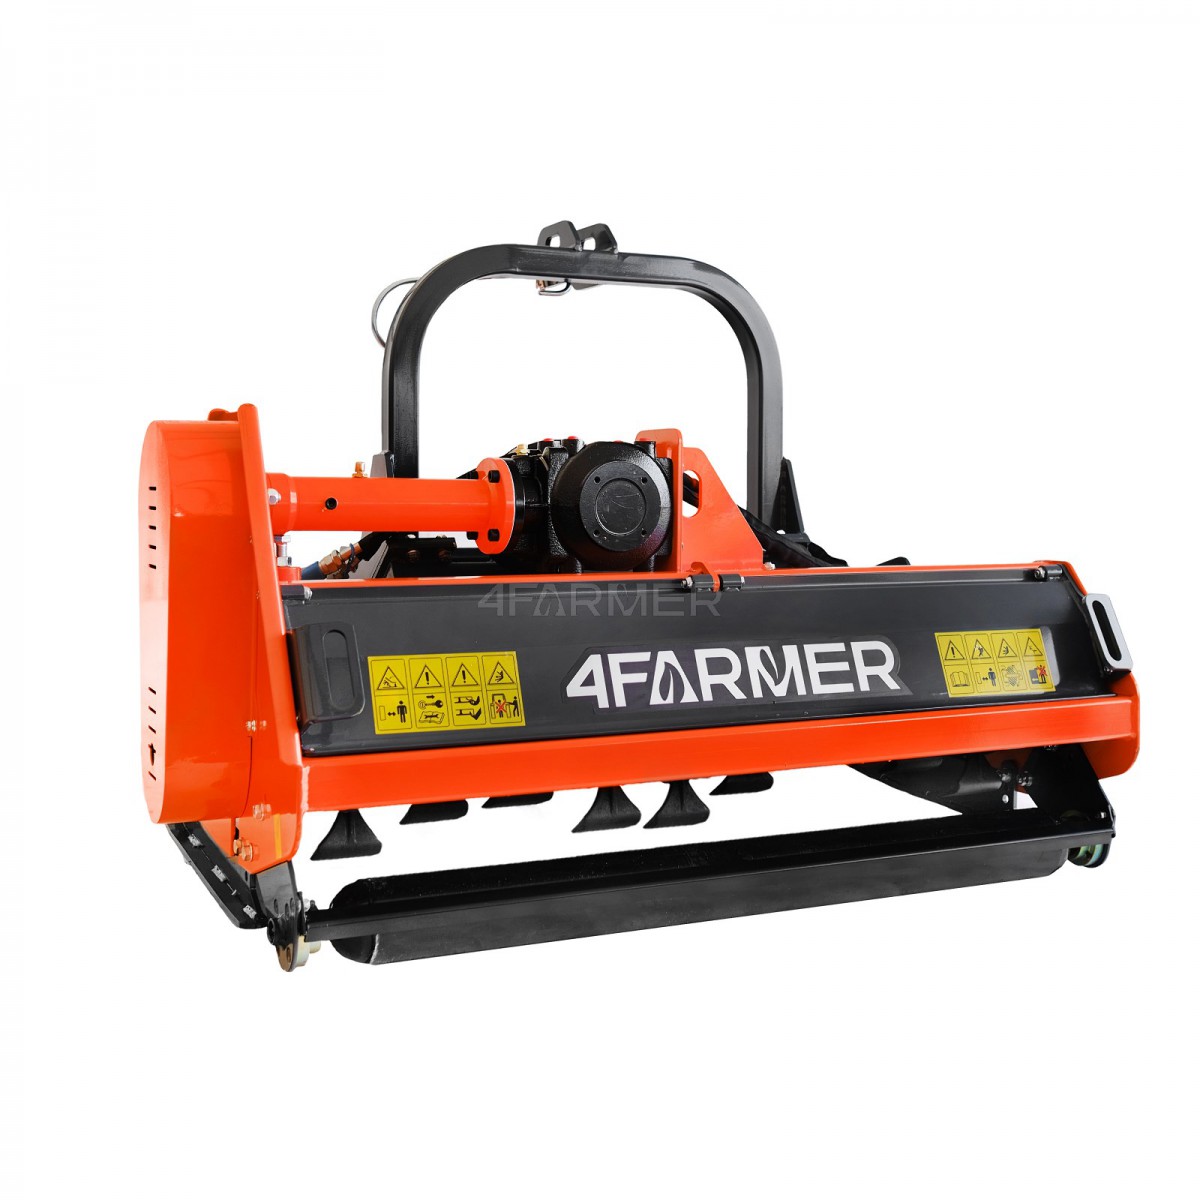 EFGCH 145D 4FARMER flail mower - orange